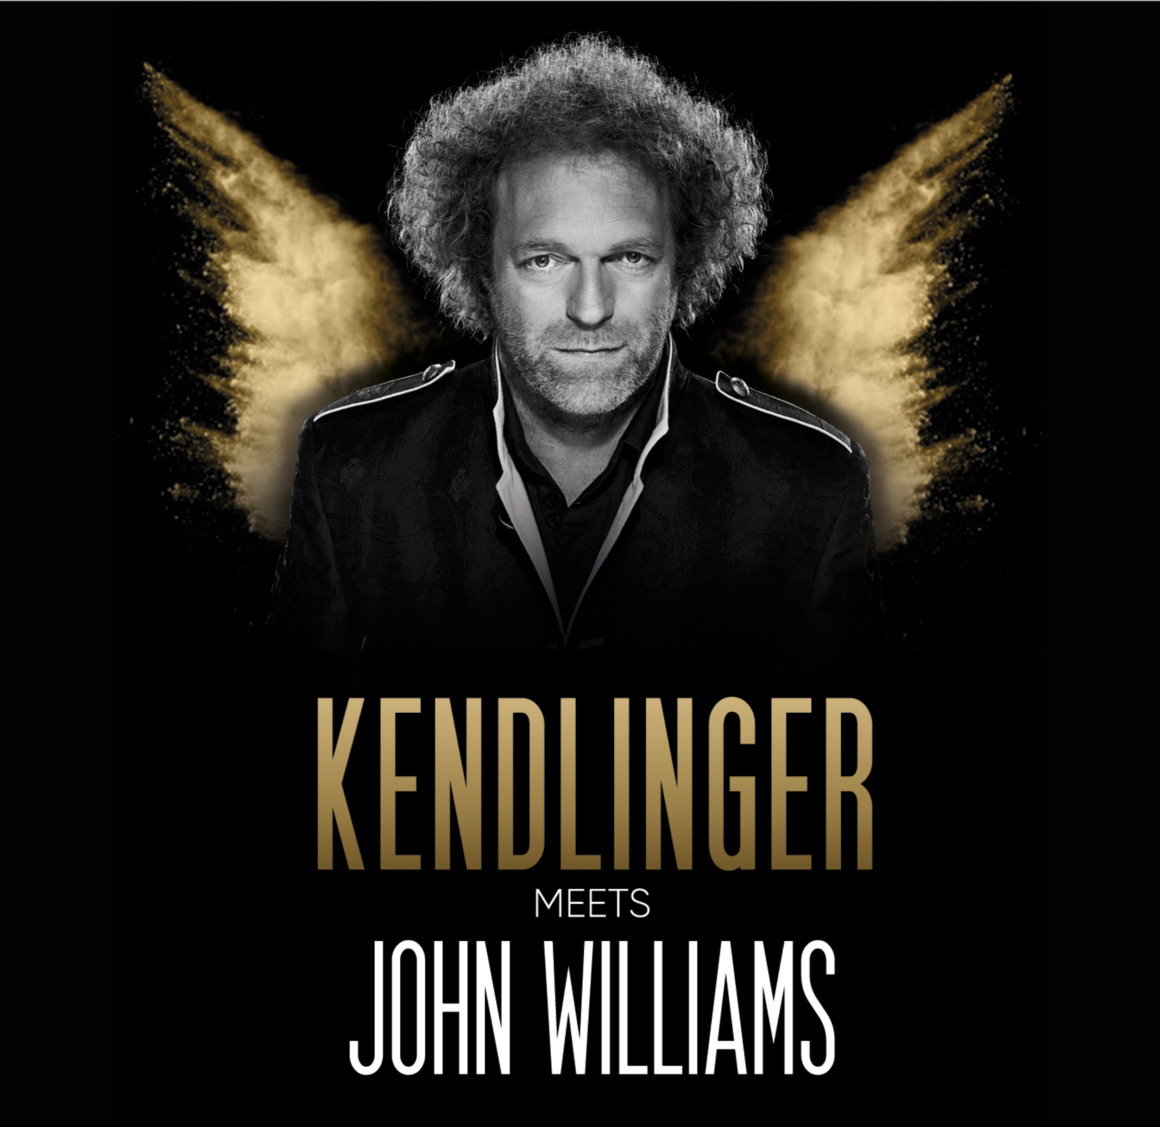 Pfingsten in Hamburg und Berlin: Kendlinger meets John Williams